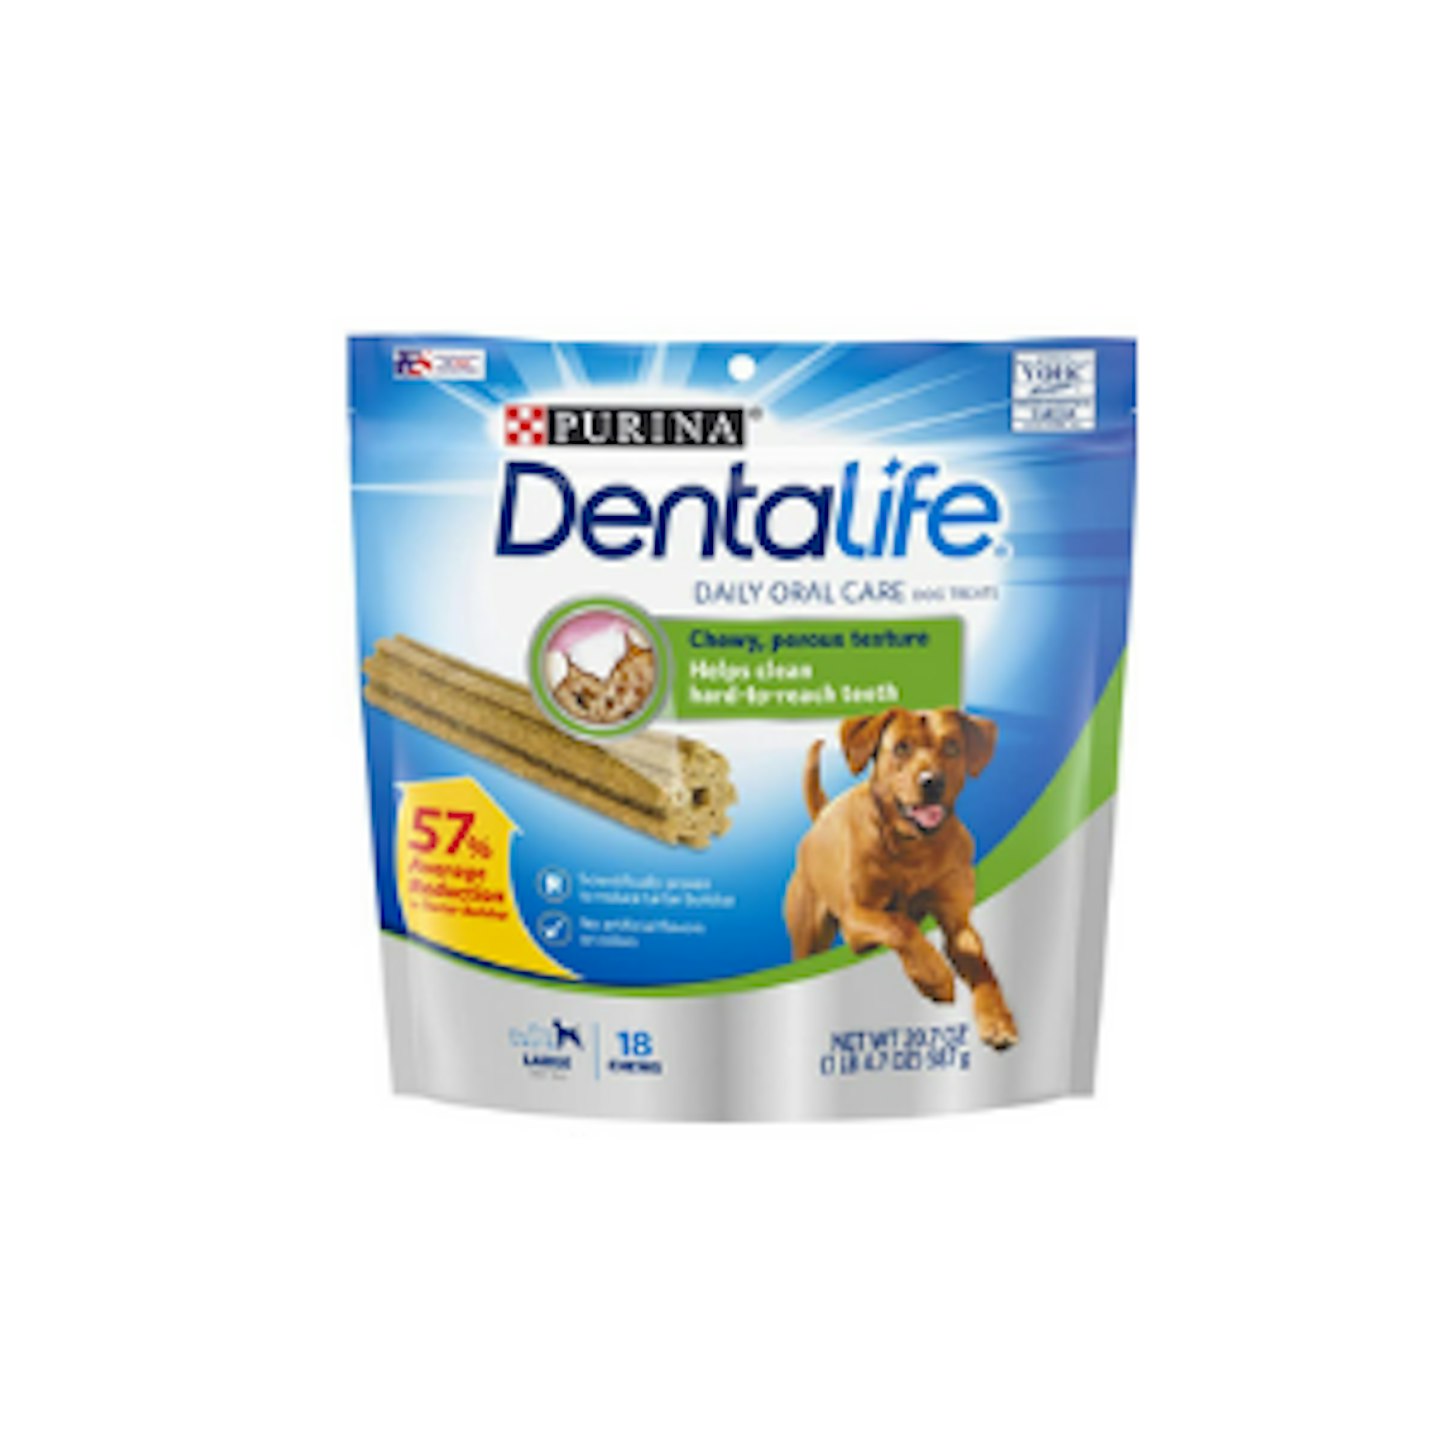 Purina DentaLife Daily Oral Care Large Dog Treats